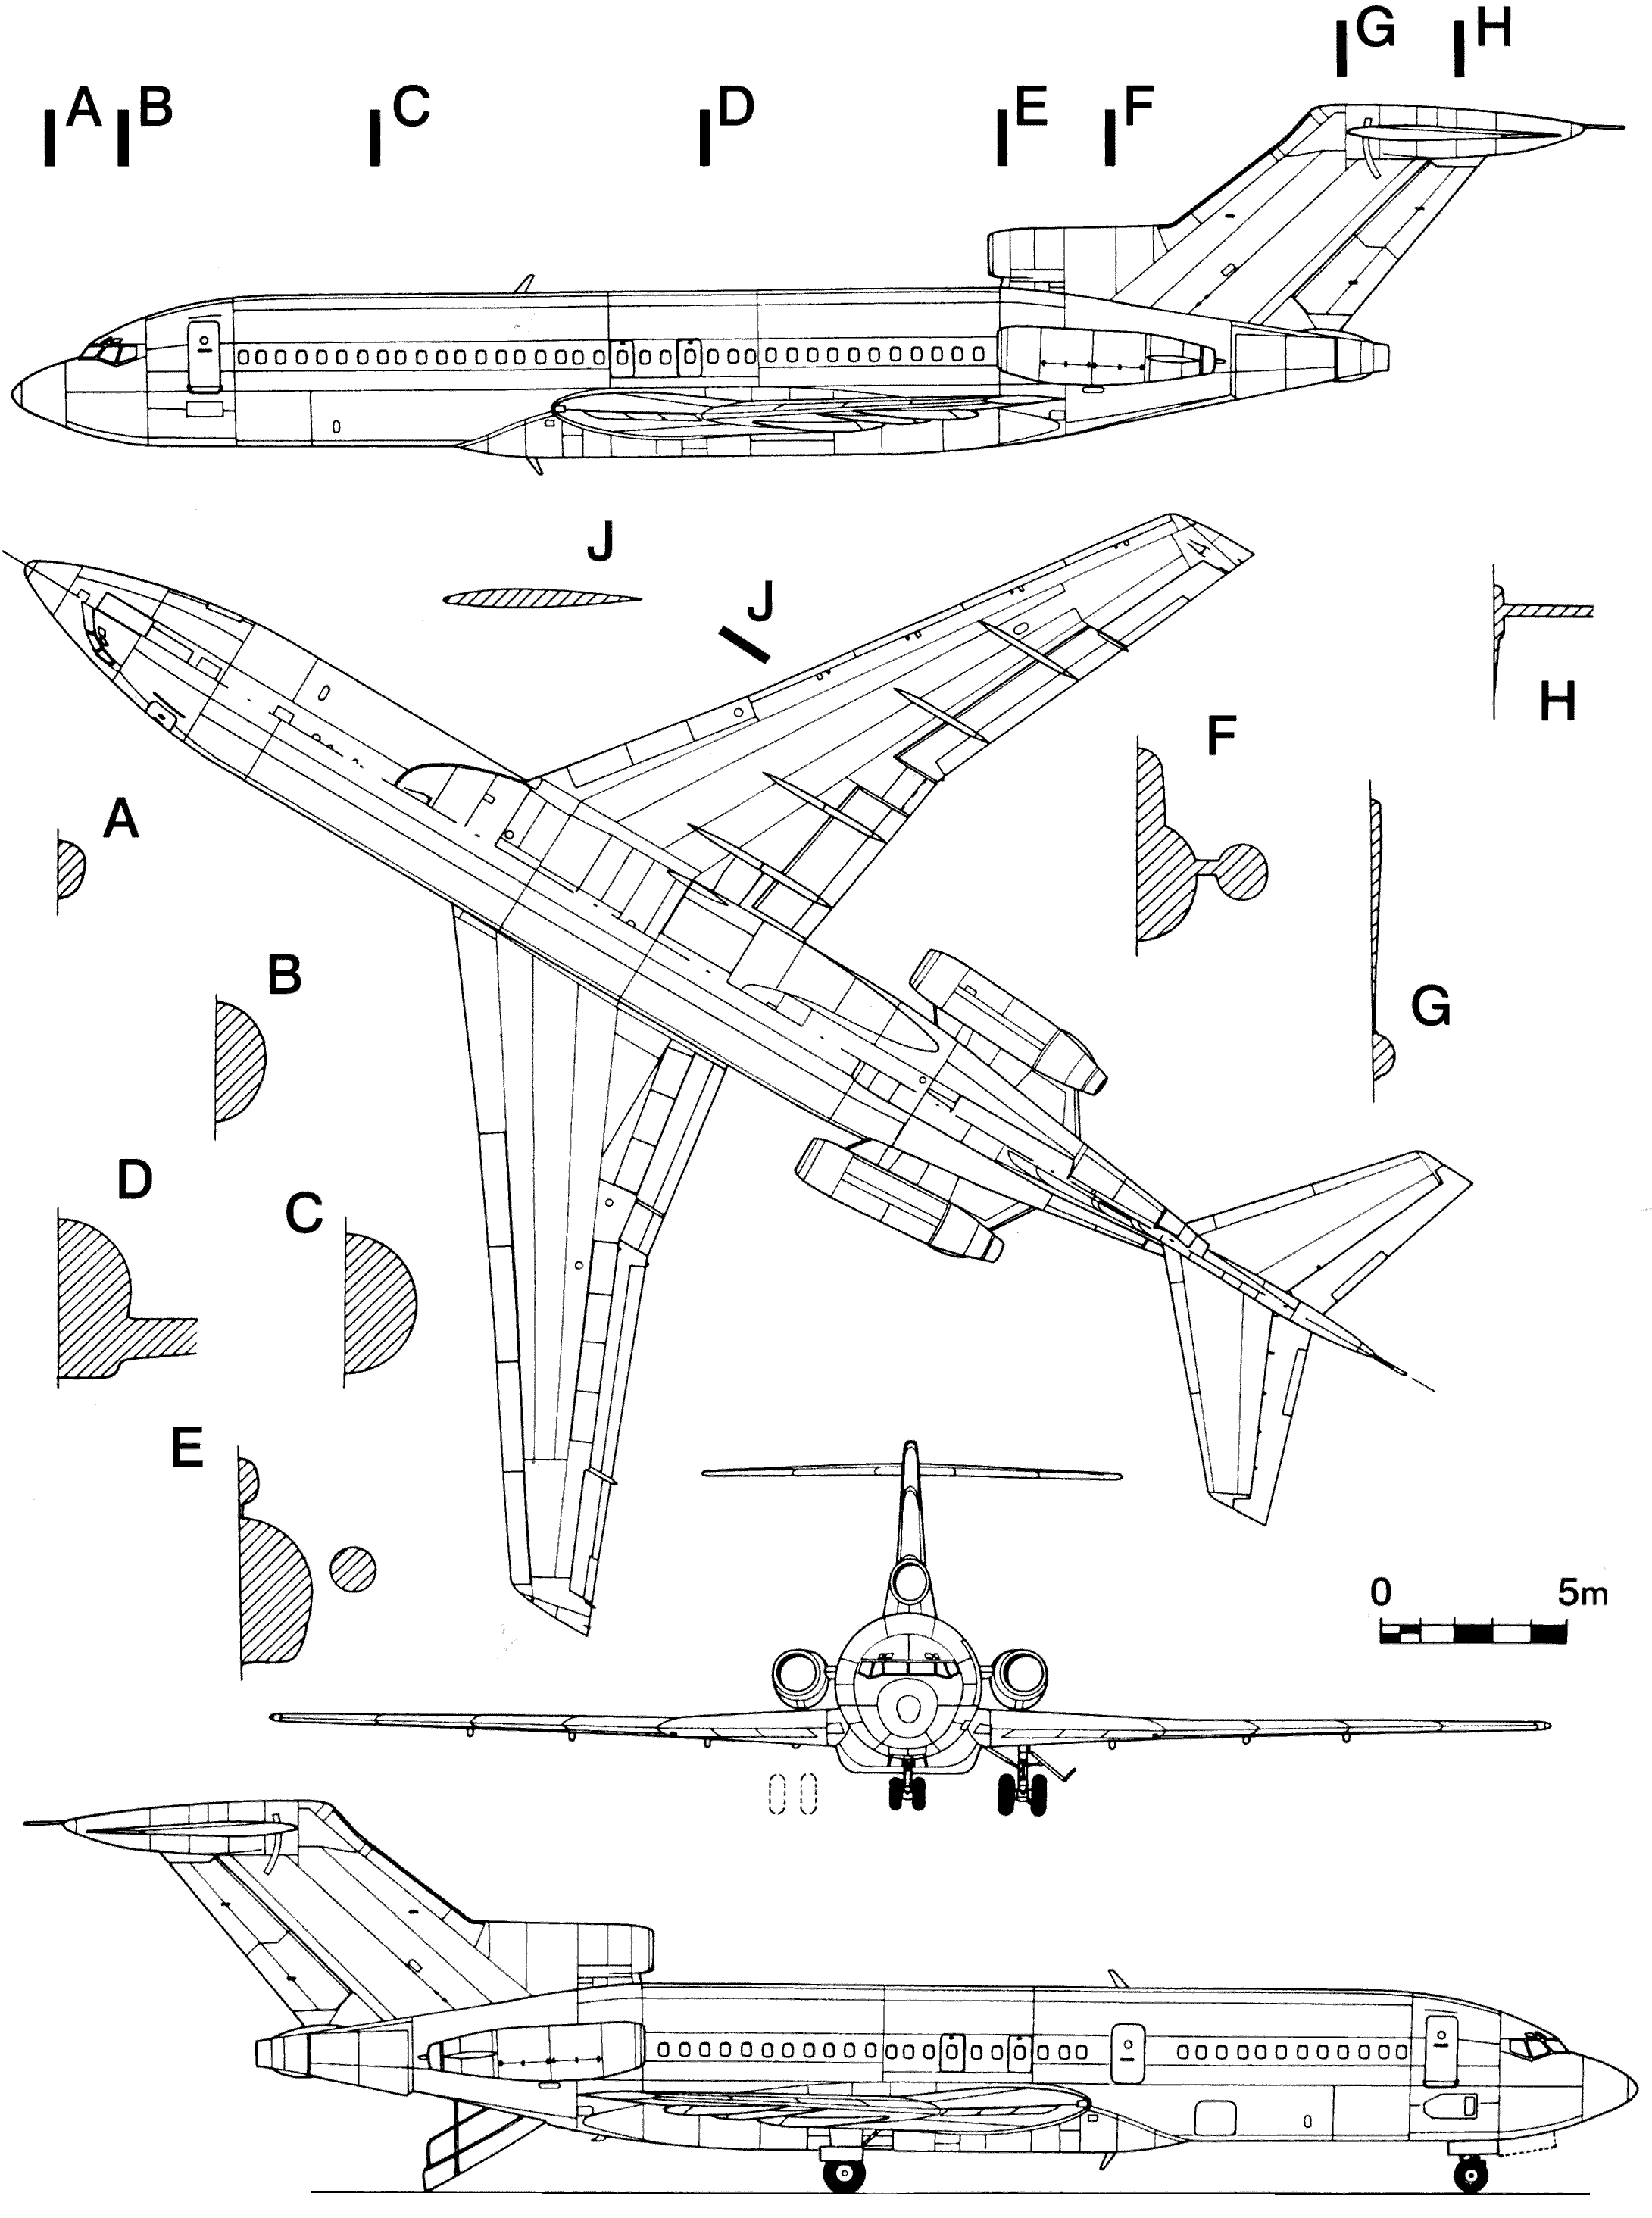 Boeing 727 blueprint